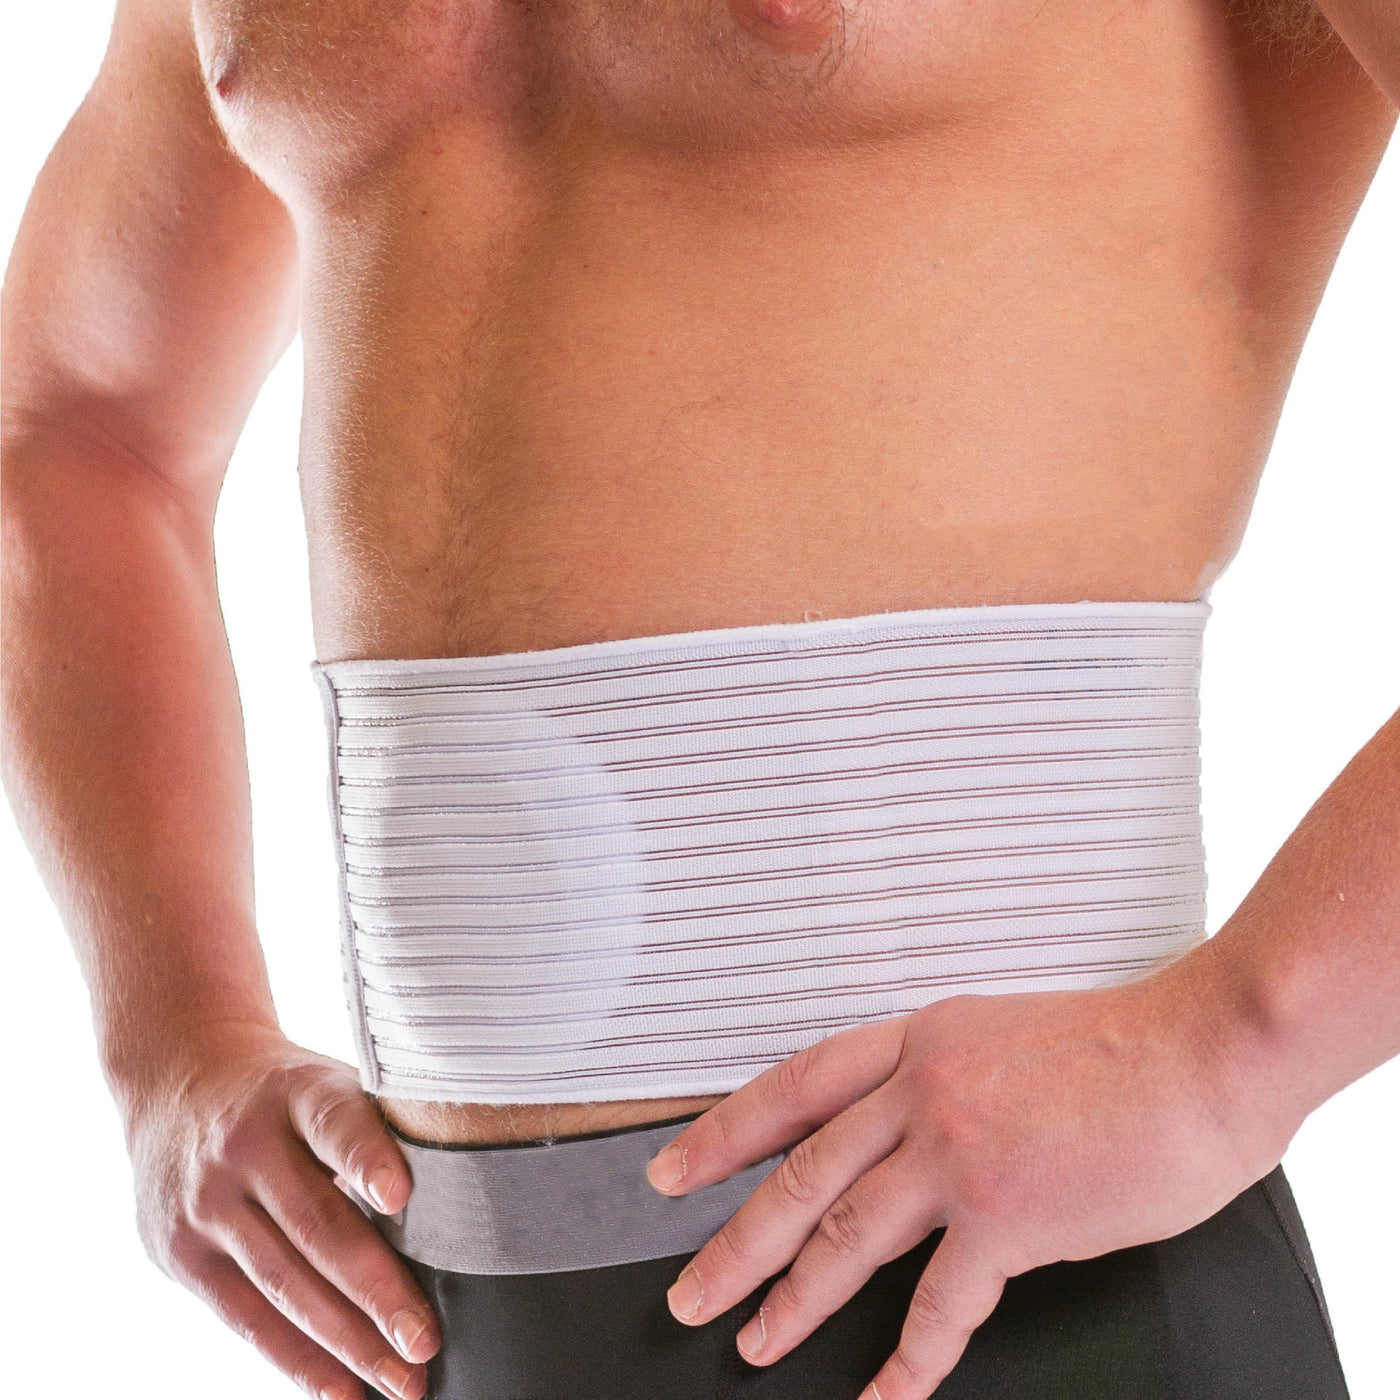 EverRelief Umbilical Hernia Belt for Men and Women (Small/Medium